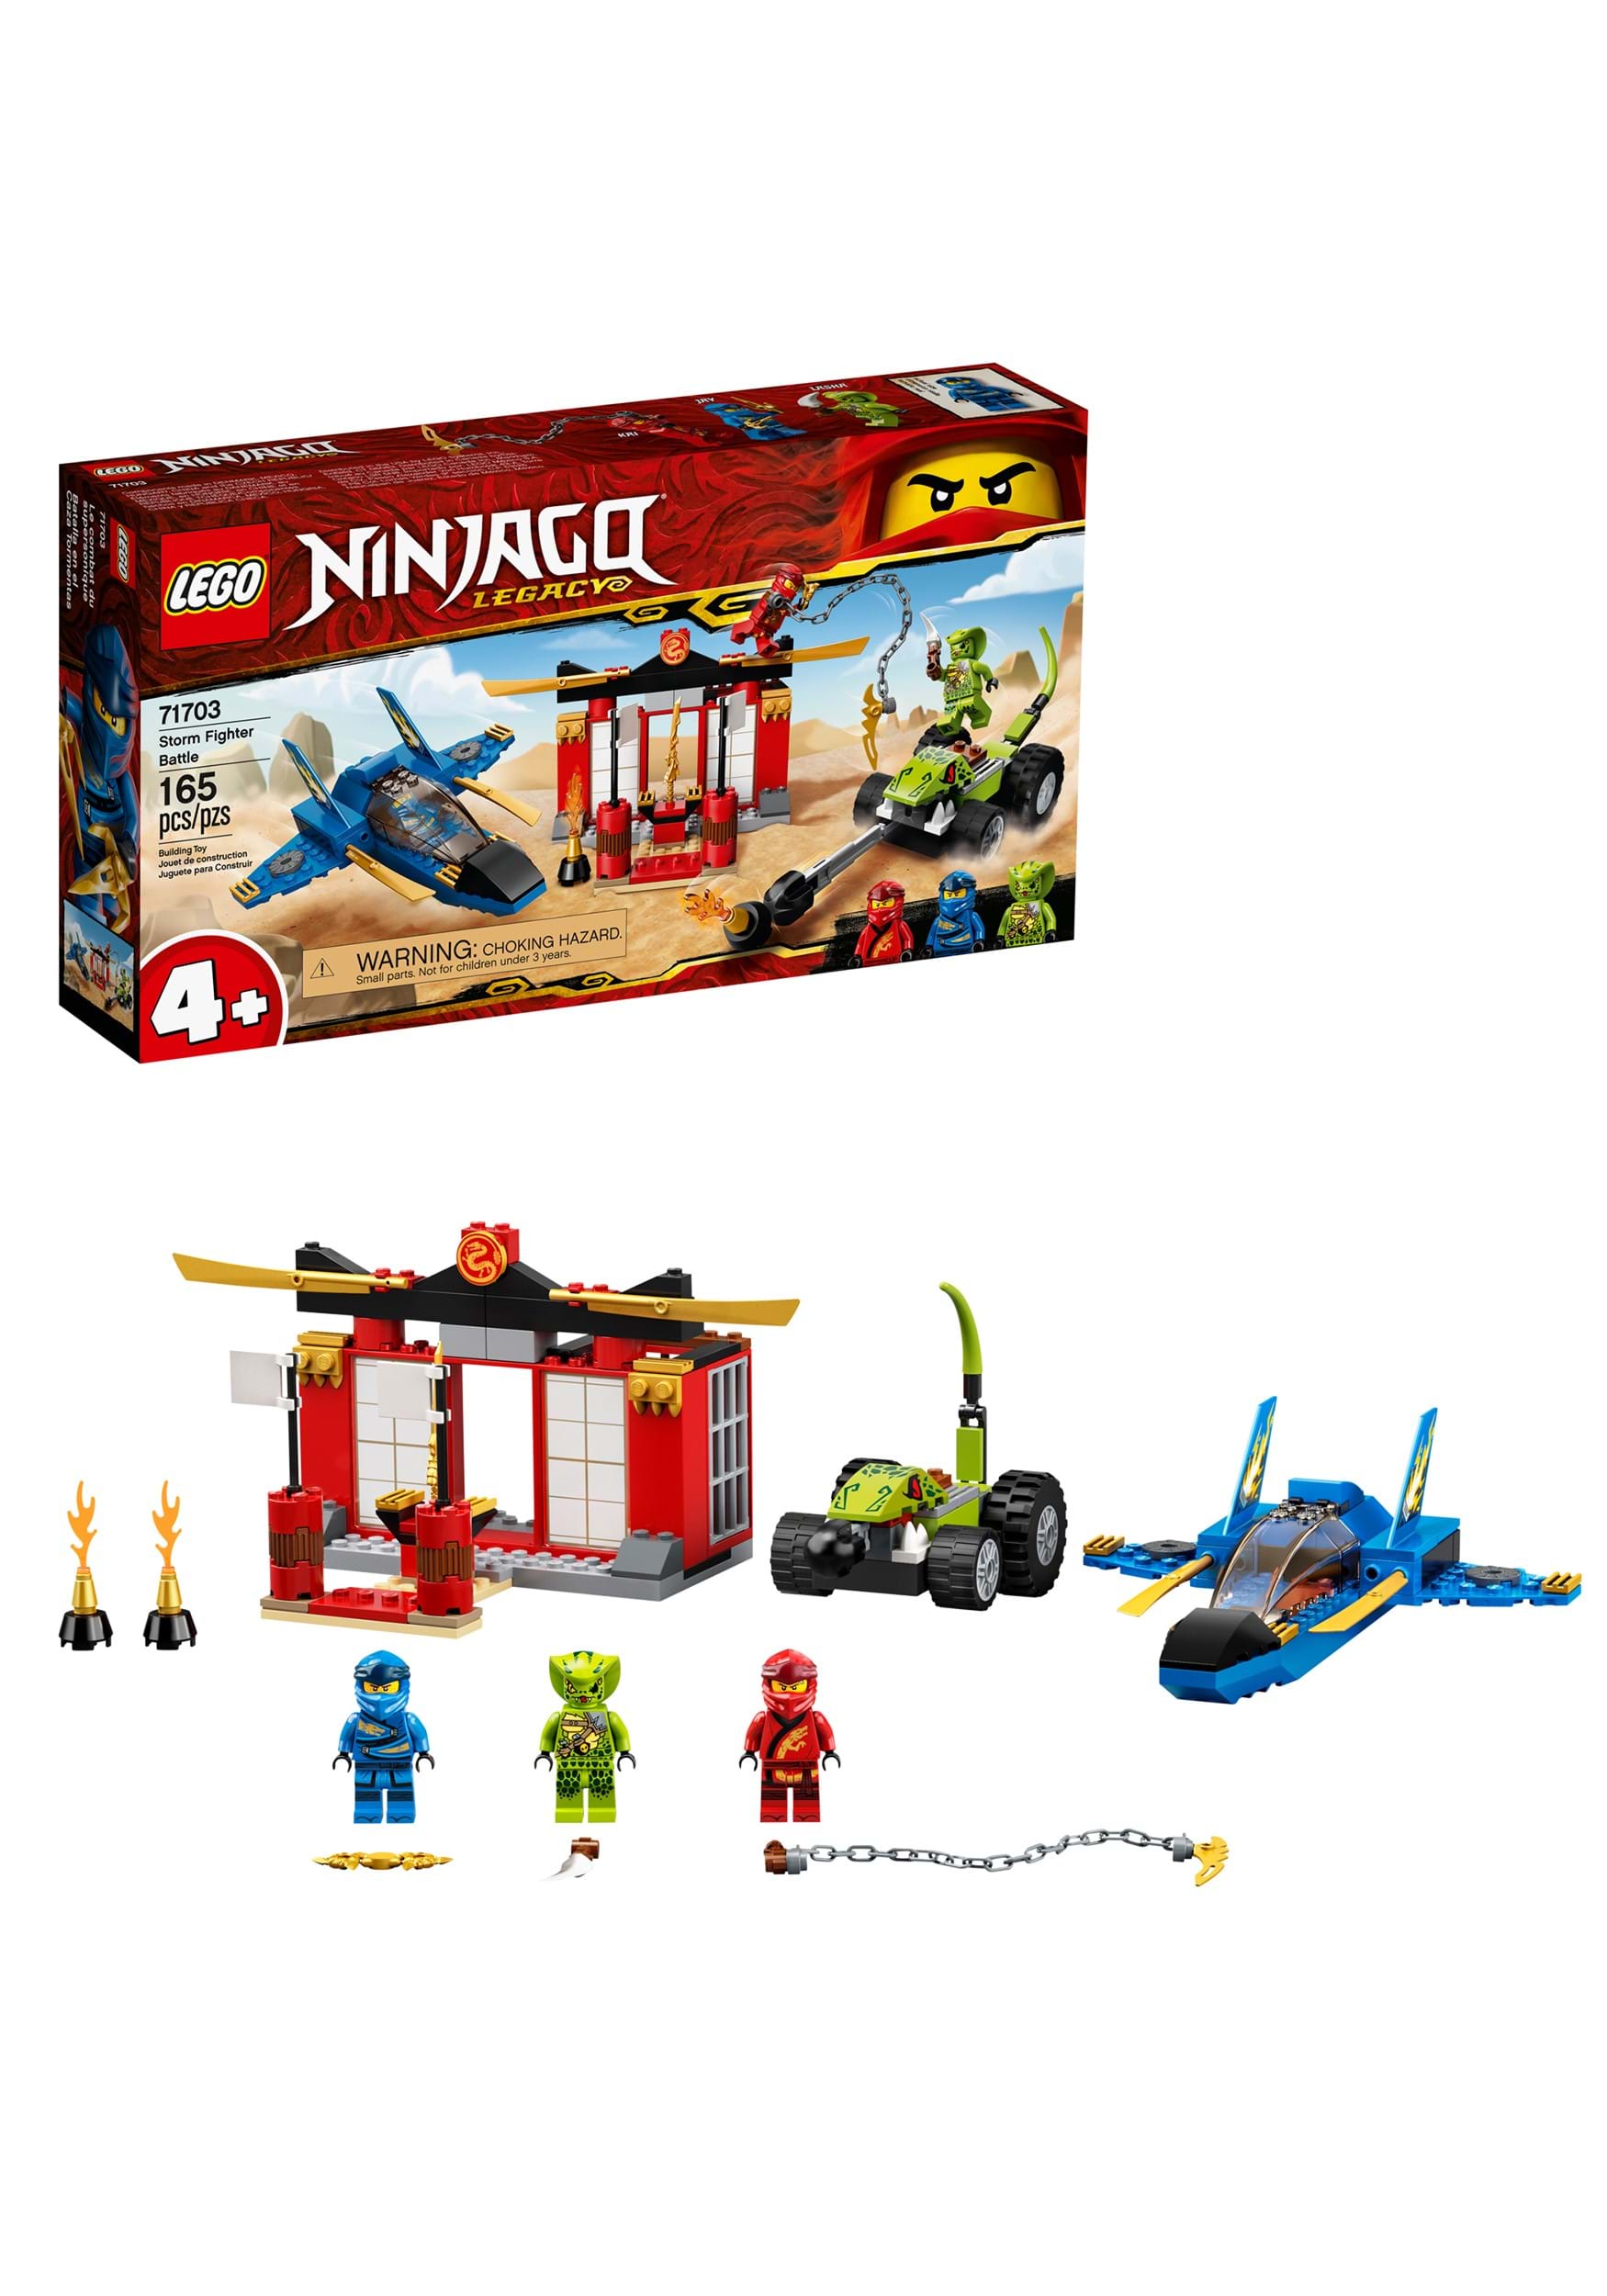 Storm Fighter Battle - LEGO Ninjago Set